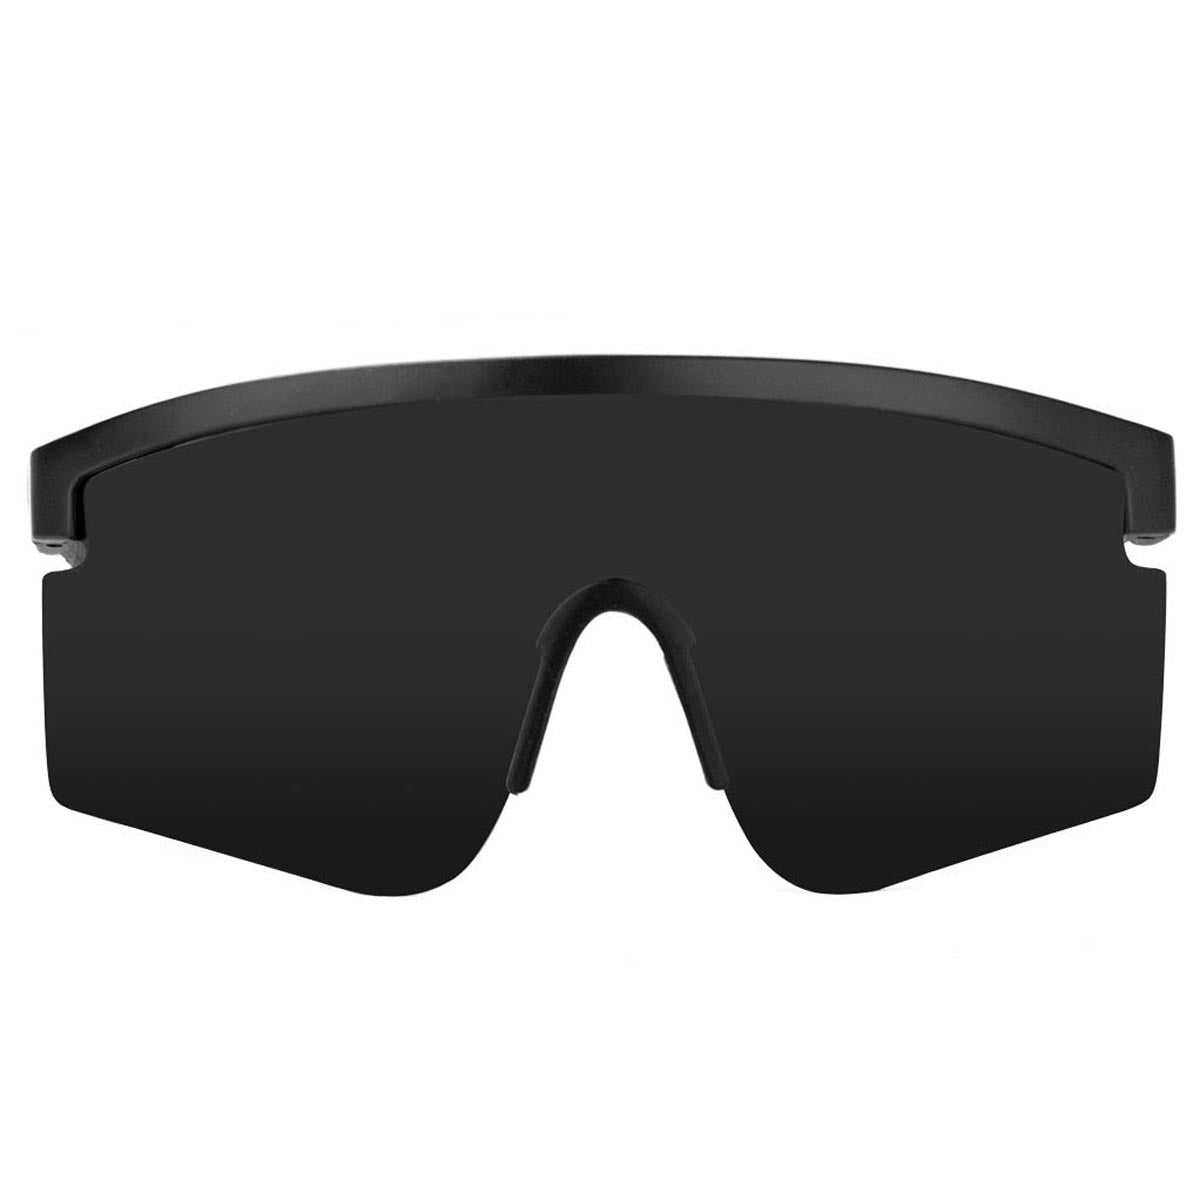 Glassy Mojave Polarized Sunglasses - Black image 2